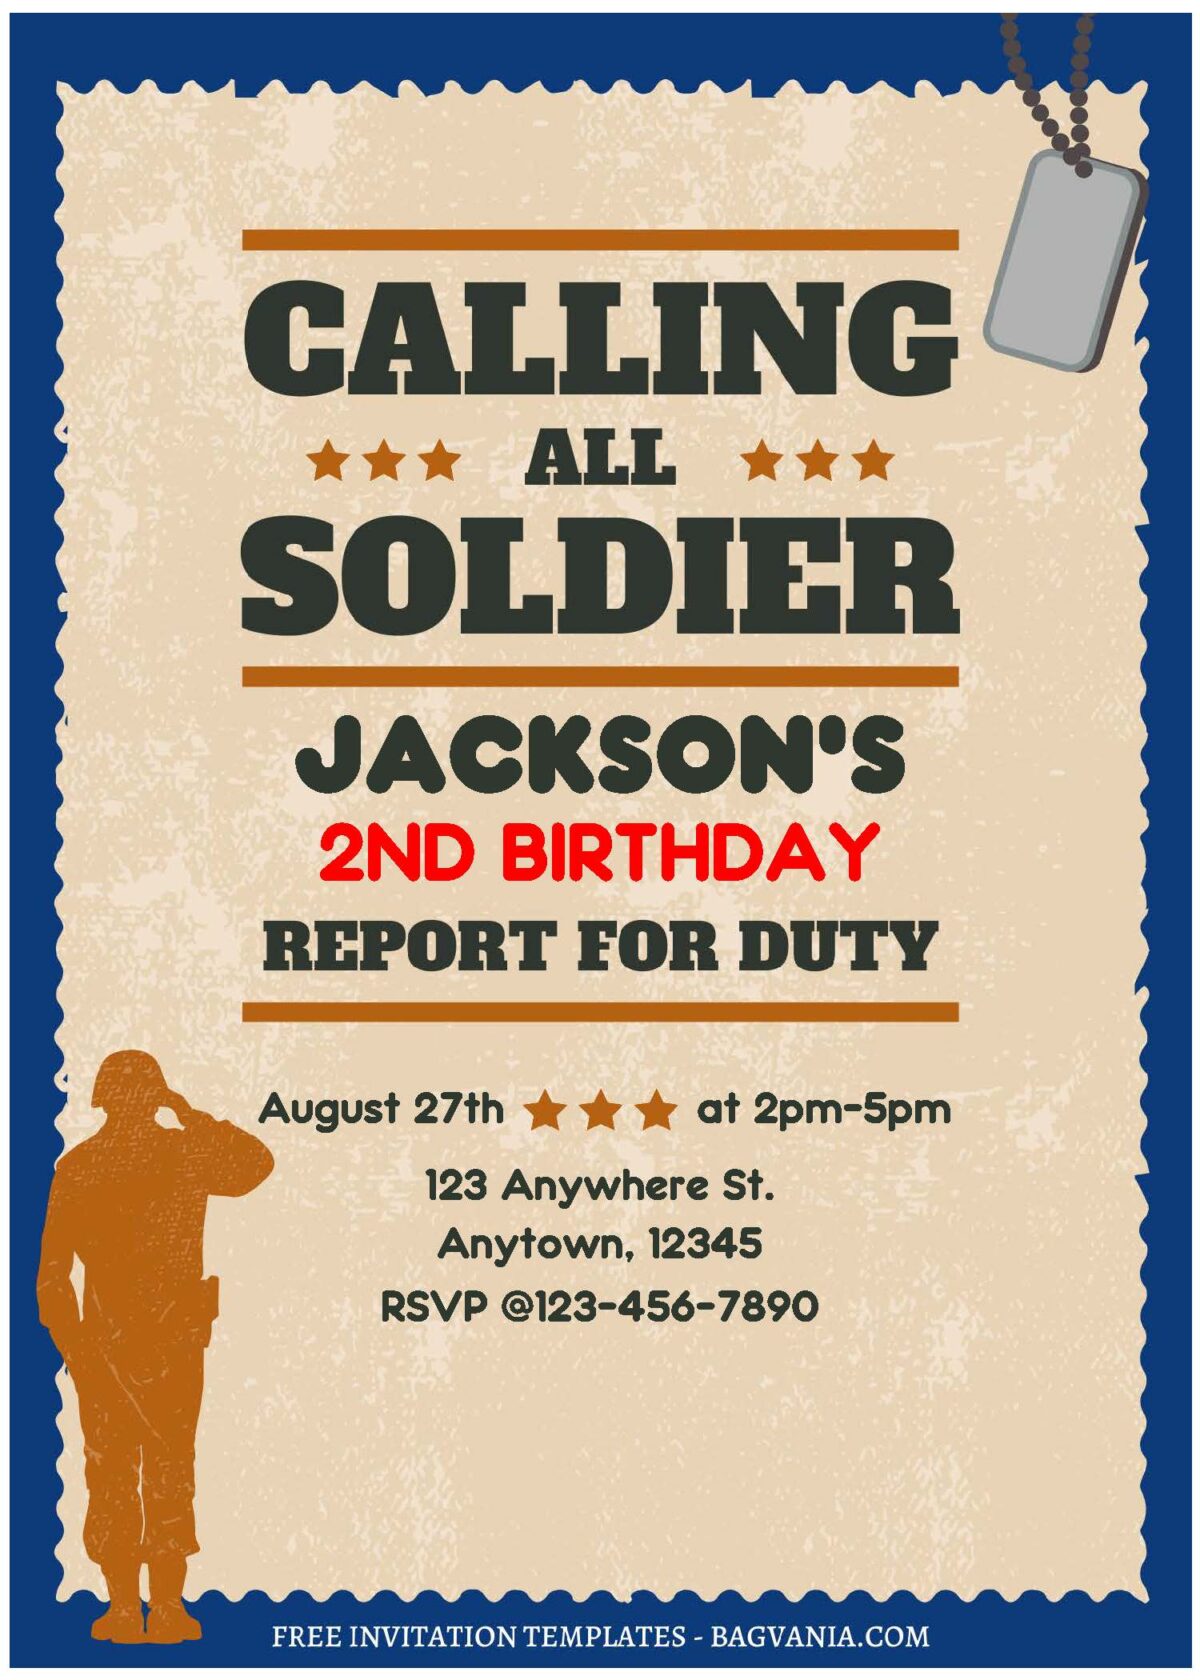 (Free Editable PDF) Calling All Soldiers Army Birthday Invitation Templates C